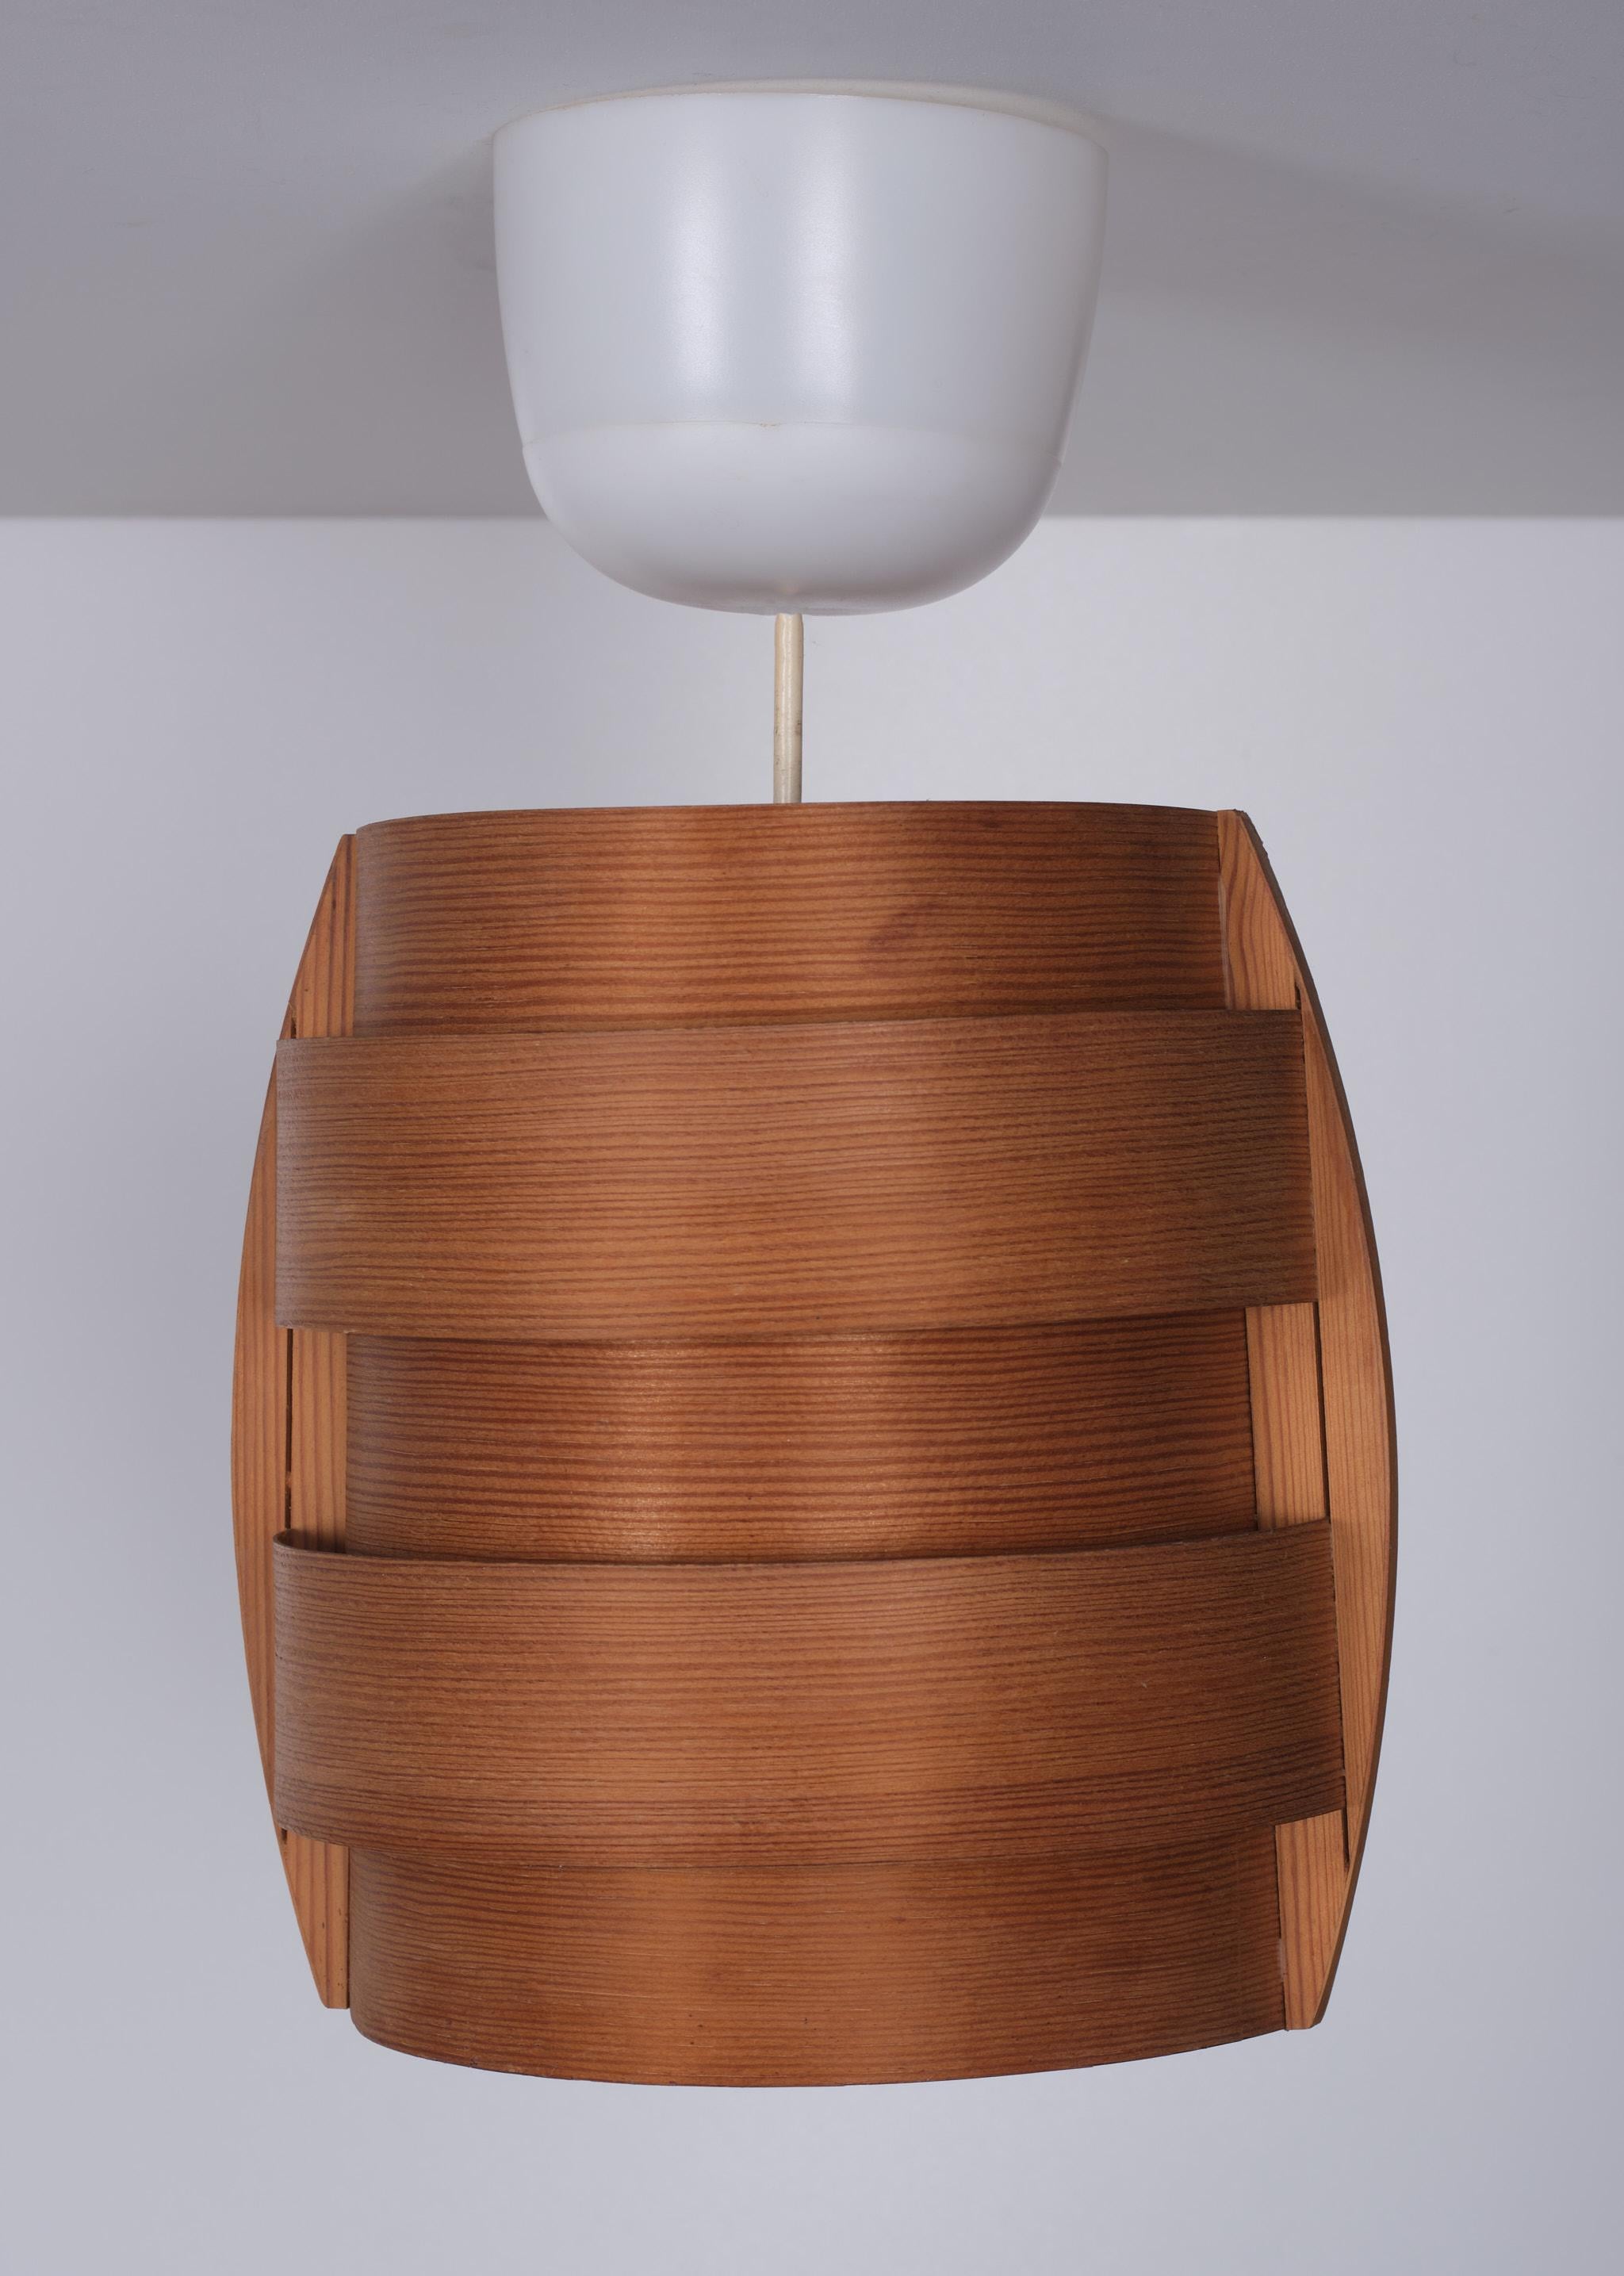 Mid-Century Modern Hans Agne Jacobssen Hanging Lamp in Plywood 1960s Sweden For Sale